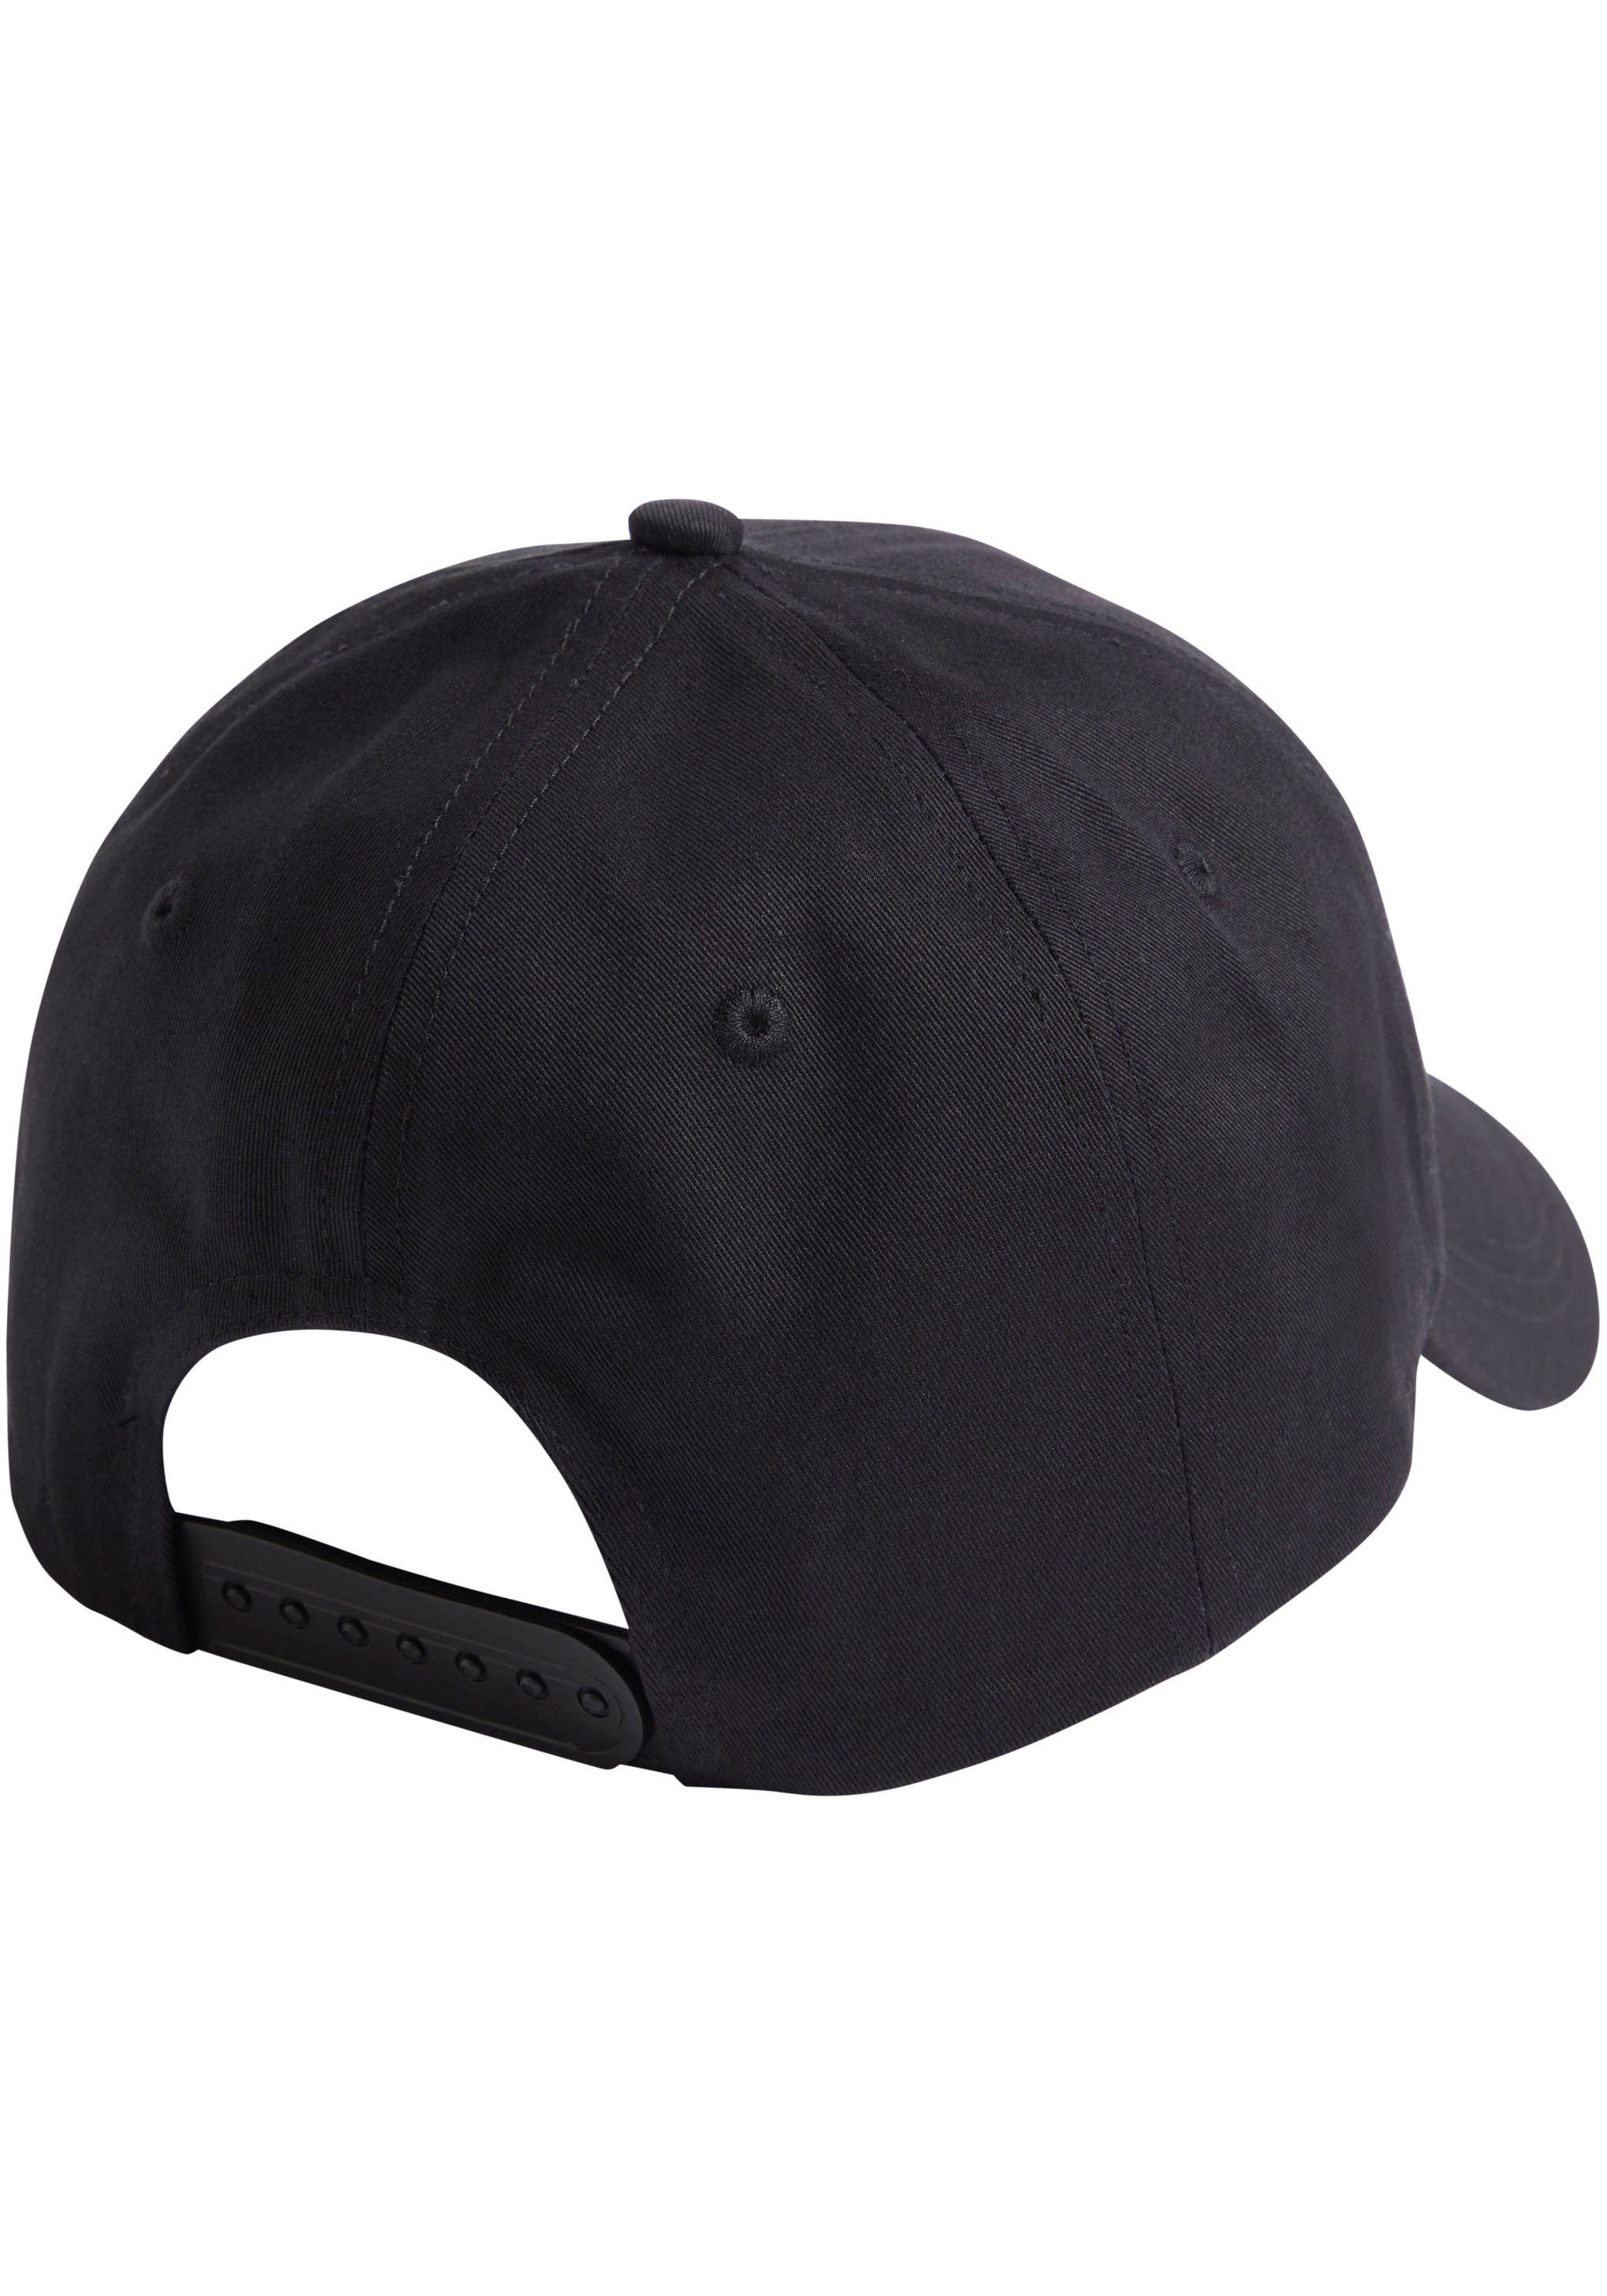 MONOGRAM CAP Jeans Calvin Klein black Baseball Cap